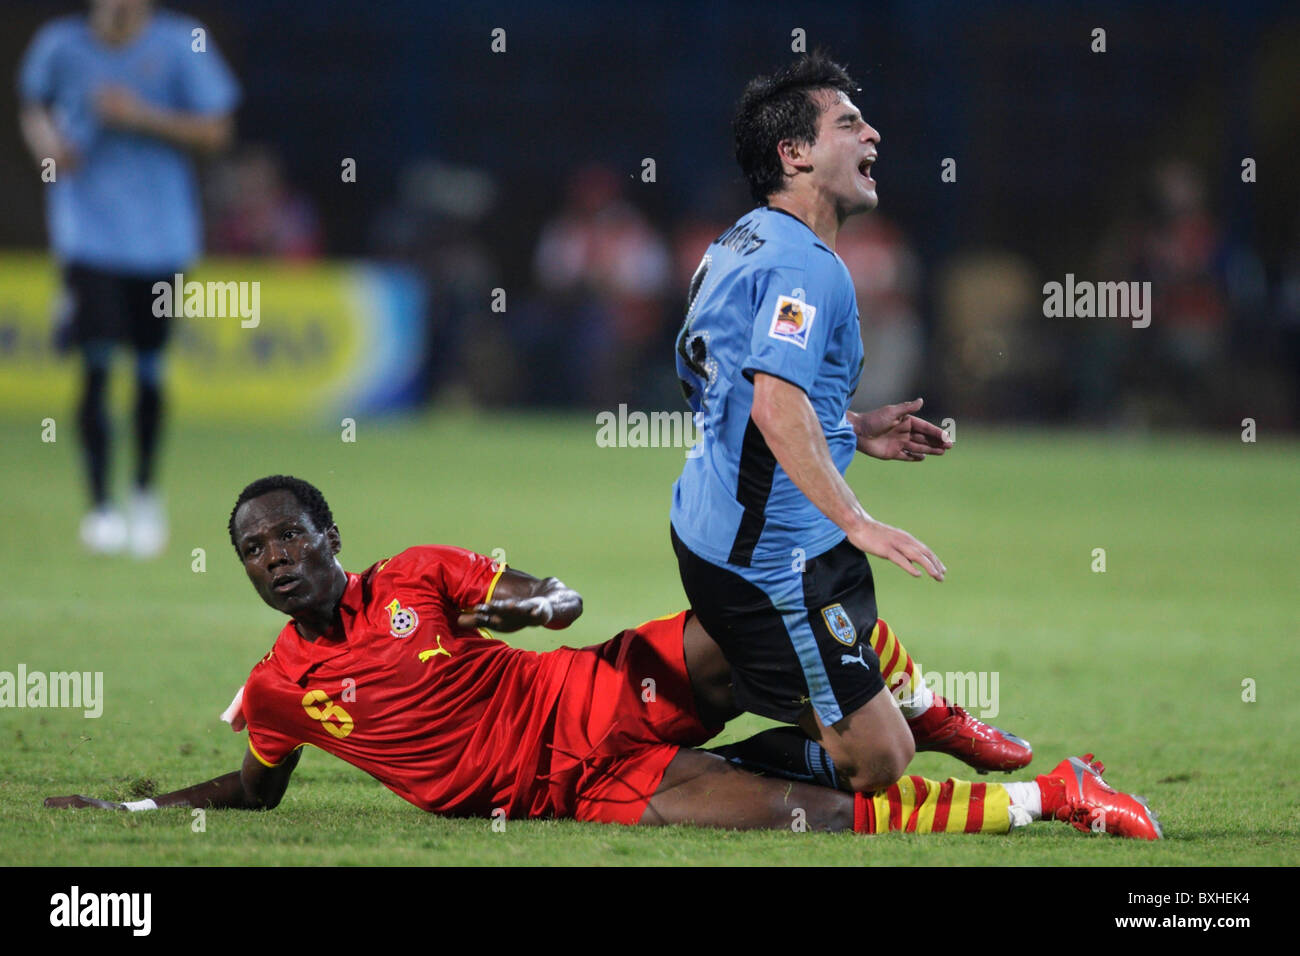 Emmanuel Agyemang Badu of Ghana (l) levels a tackle on Nicolas Lodeiro of Uruguay (r) during a 2009 U-20 World Cup soccer match. Stock Photo